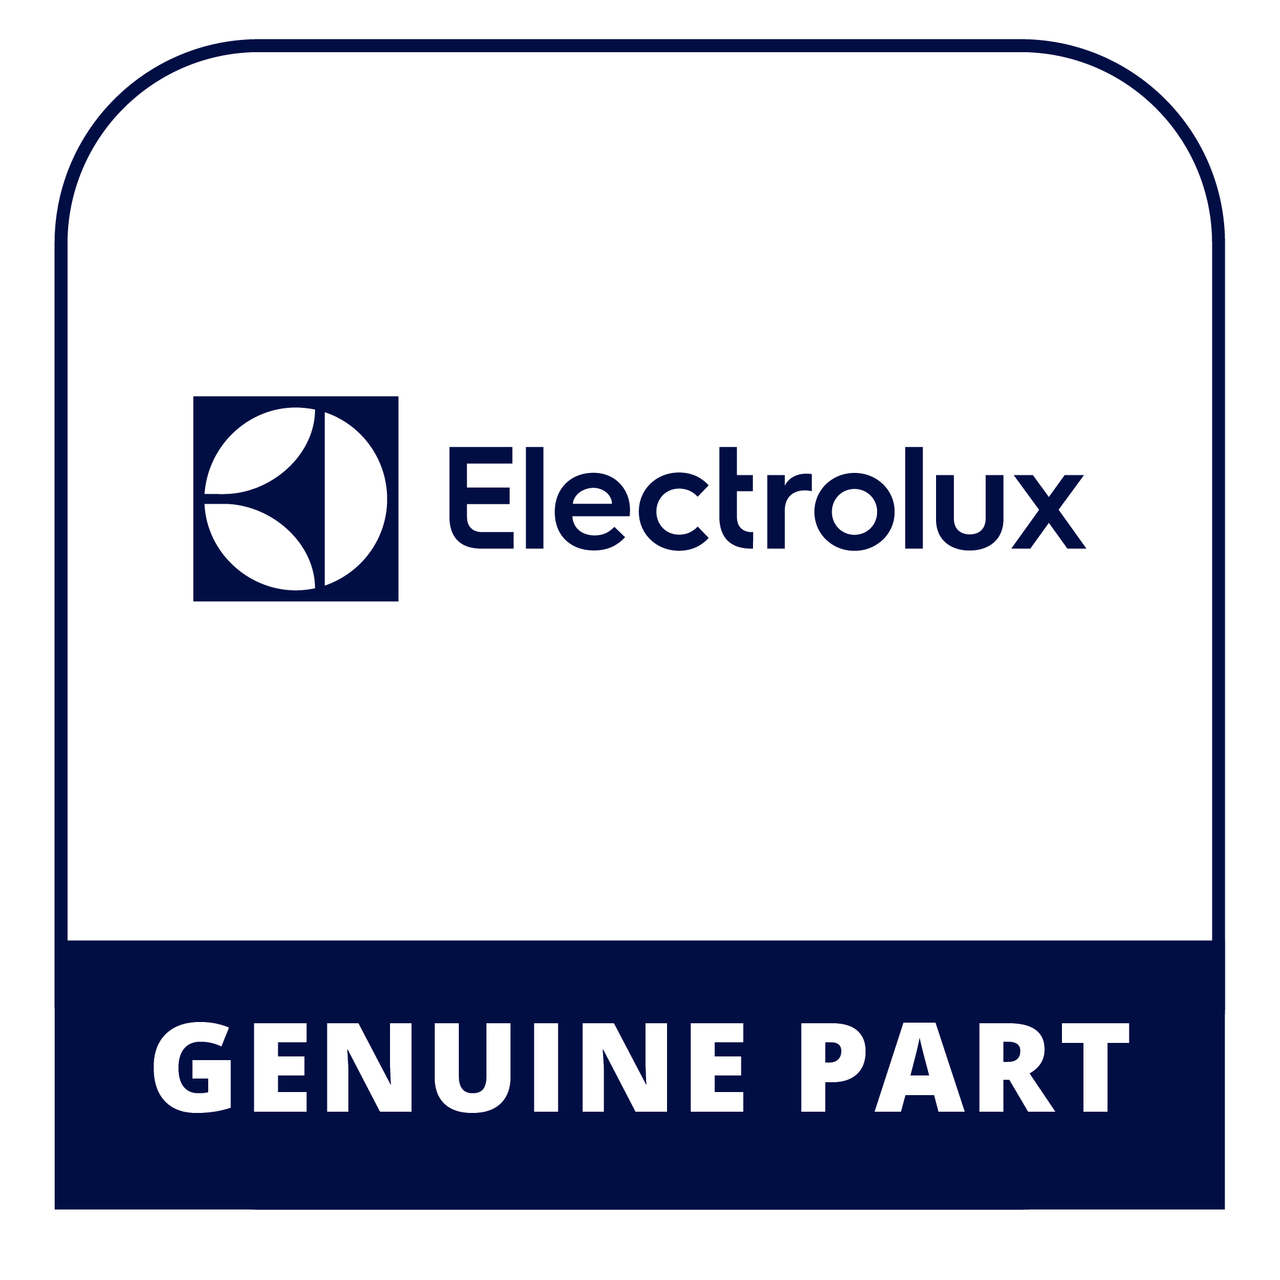 Frigidaire - Electrolux 134146100 Oring - Genuine Electrolux Part